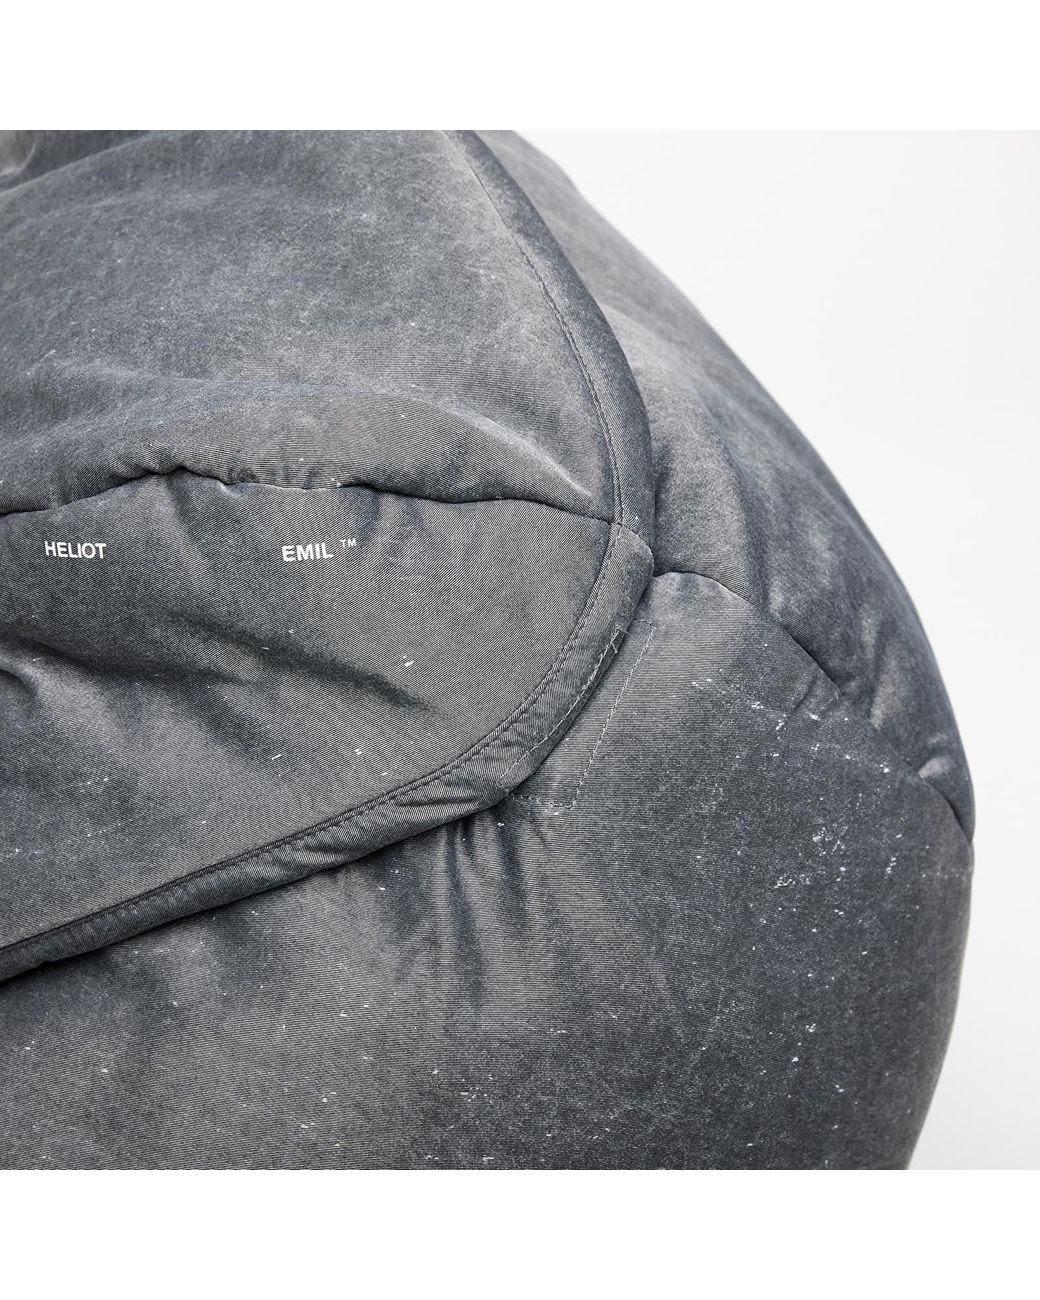 HELIOT EMIL Amorphous Crossbody Bag in Gray | Lyst